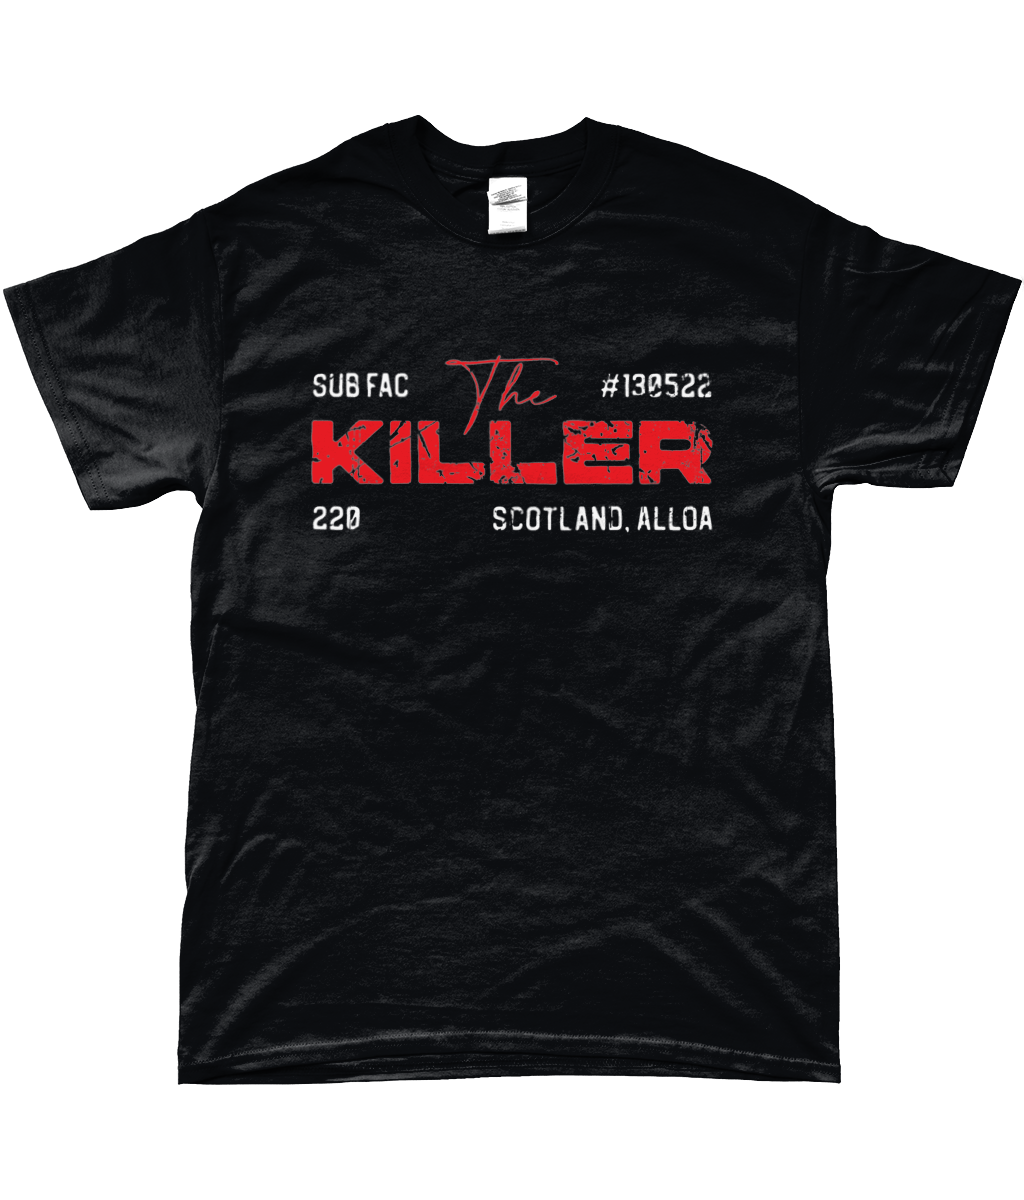 The Killer Logo T-Shirt (Black)